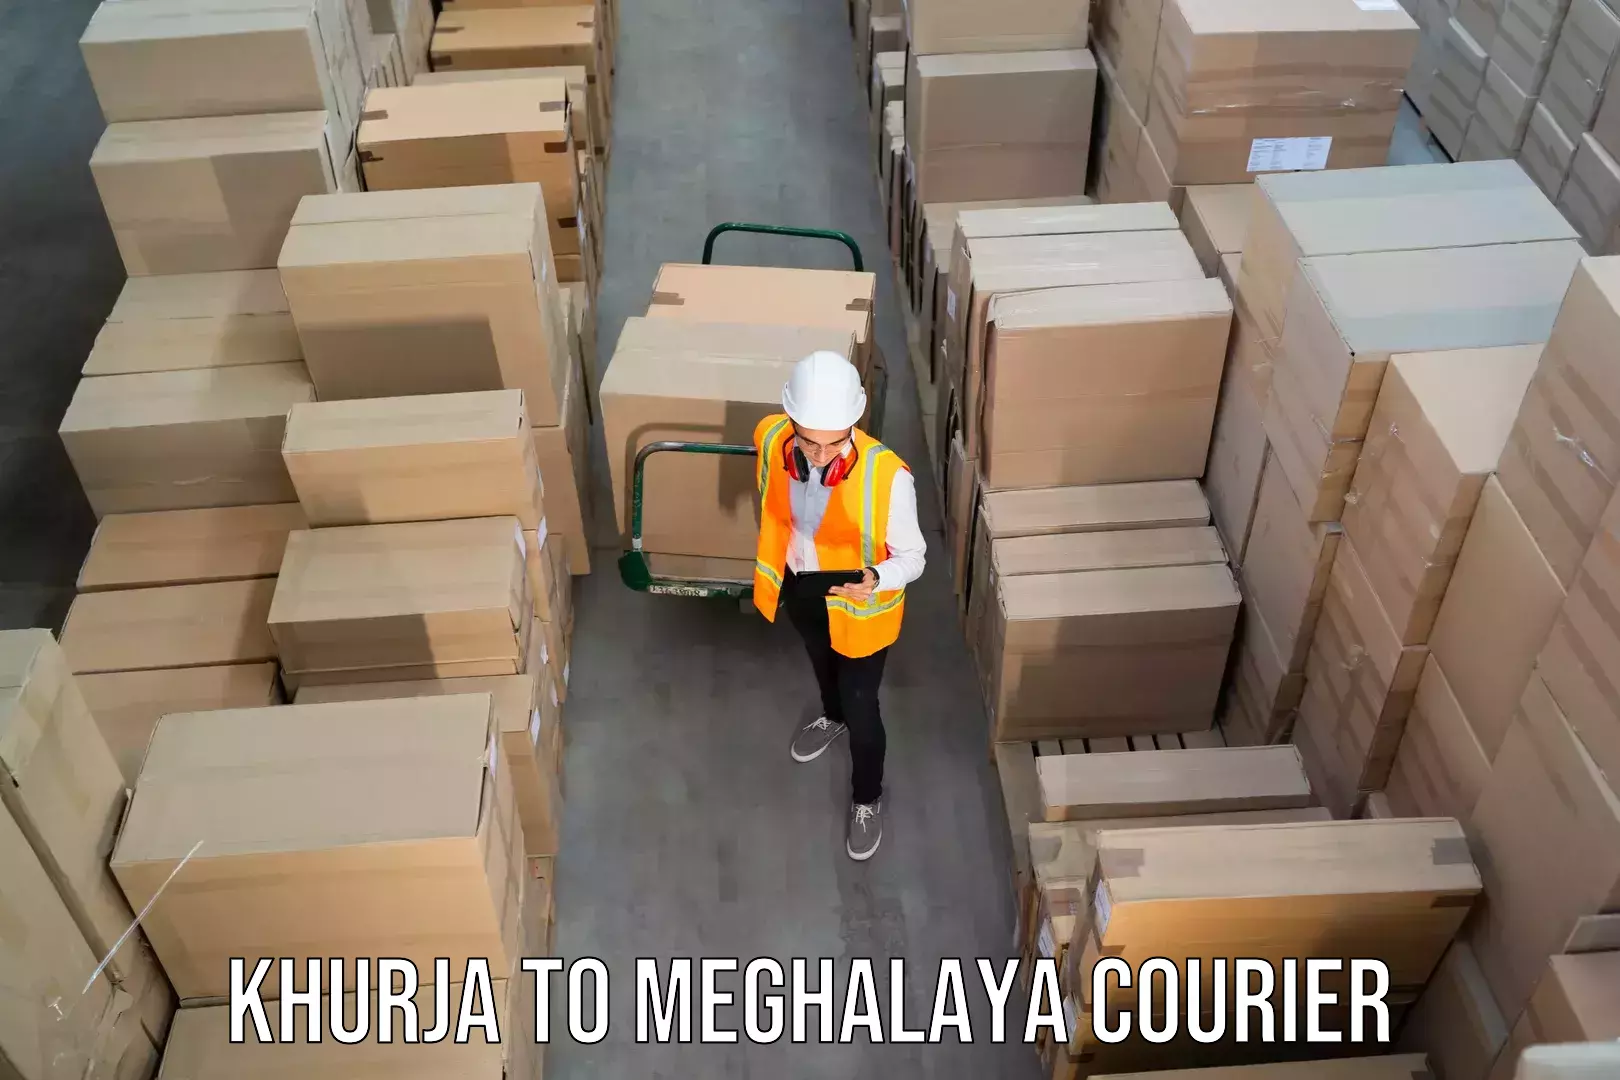 High-capacity parcel service Khurja to Meghalaya